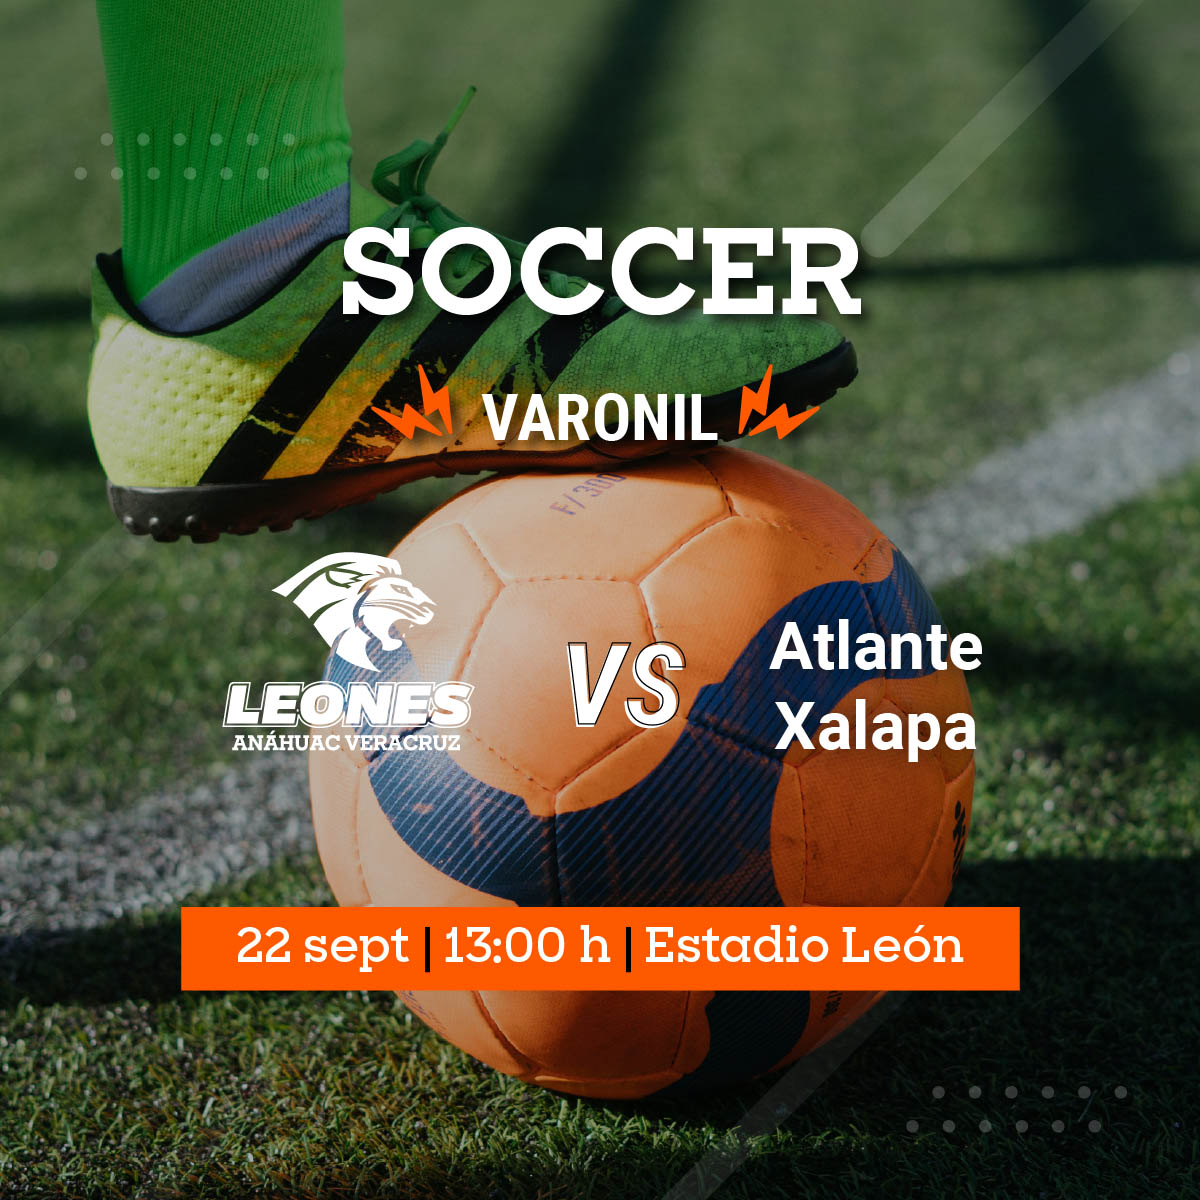 Soccer Varonil: Encuentro Amistoso vs Atlante Xalapa